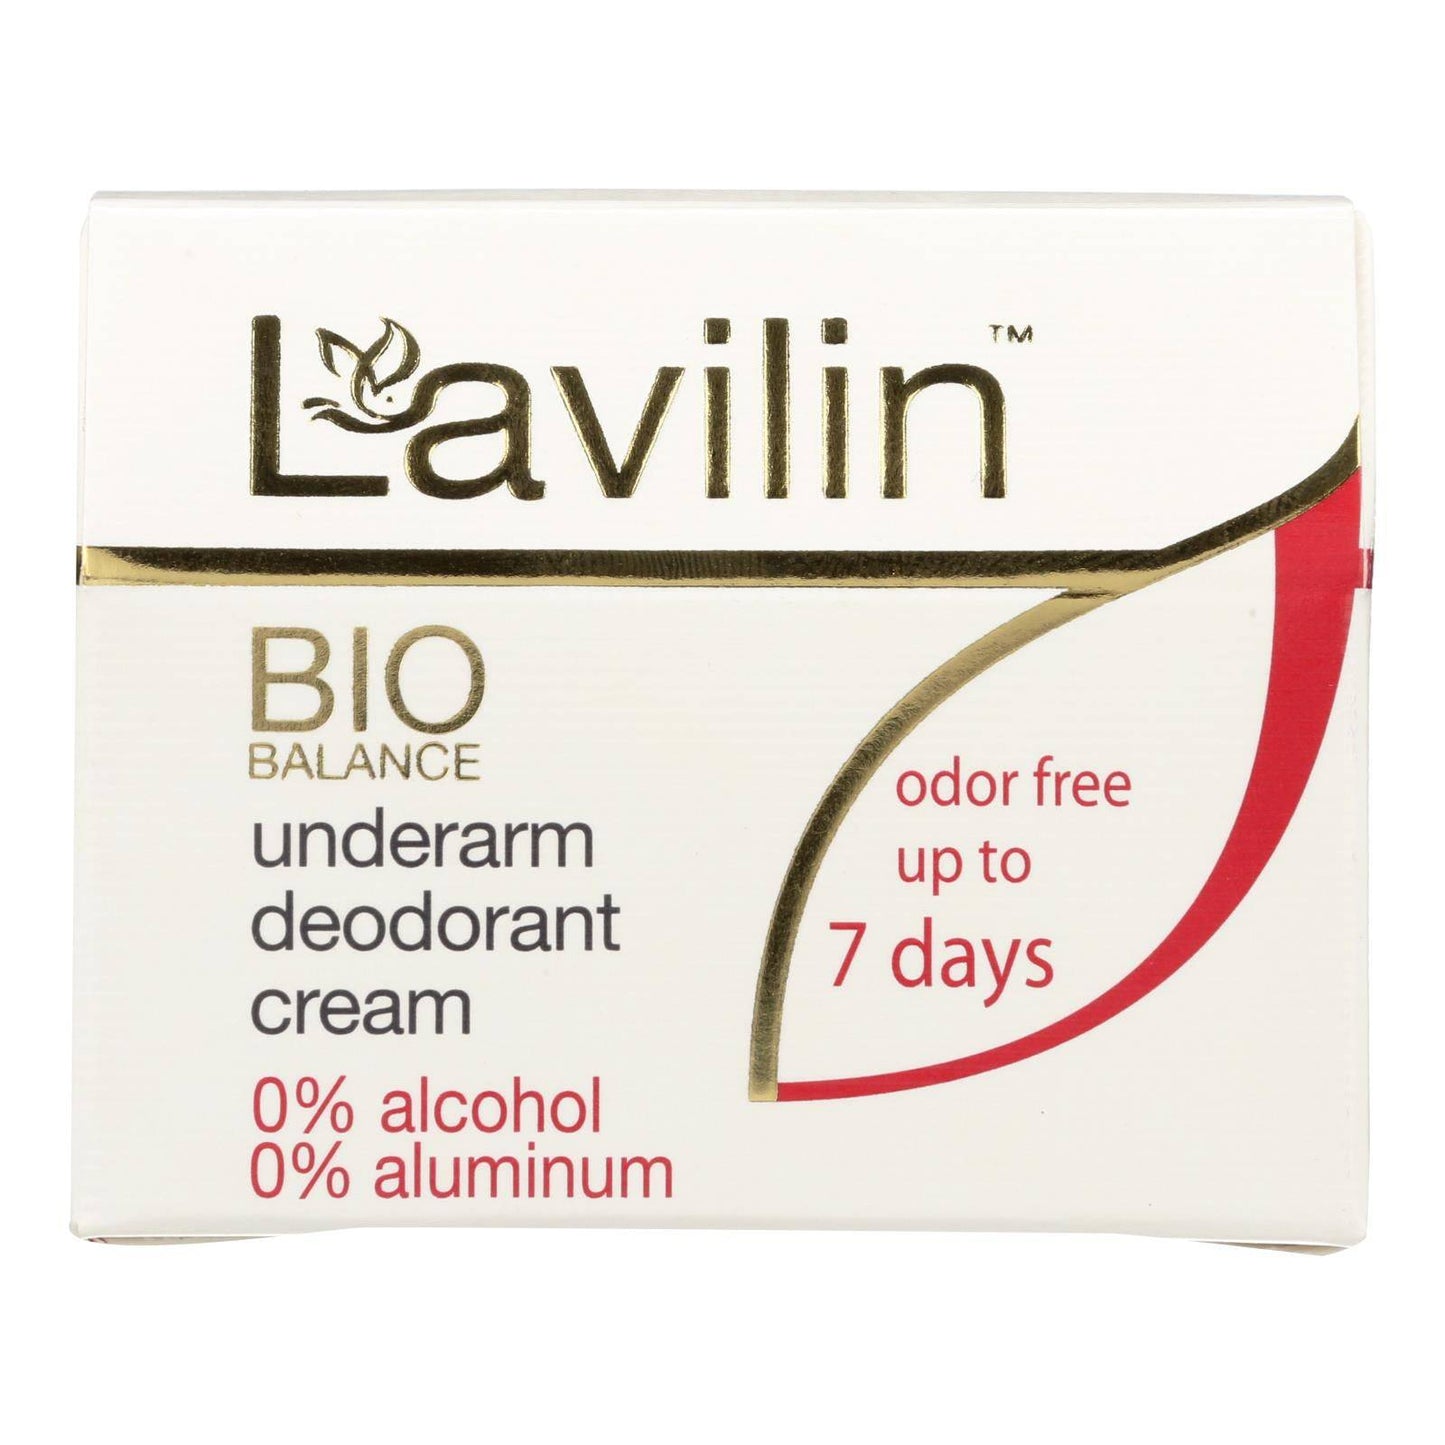 Buy Lavilin Deodorant - Bio Balance - Underarm - Cream - 2.1 Oz  at OnlyNaturals.us